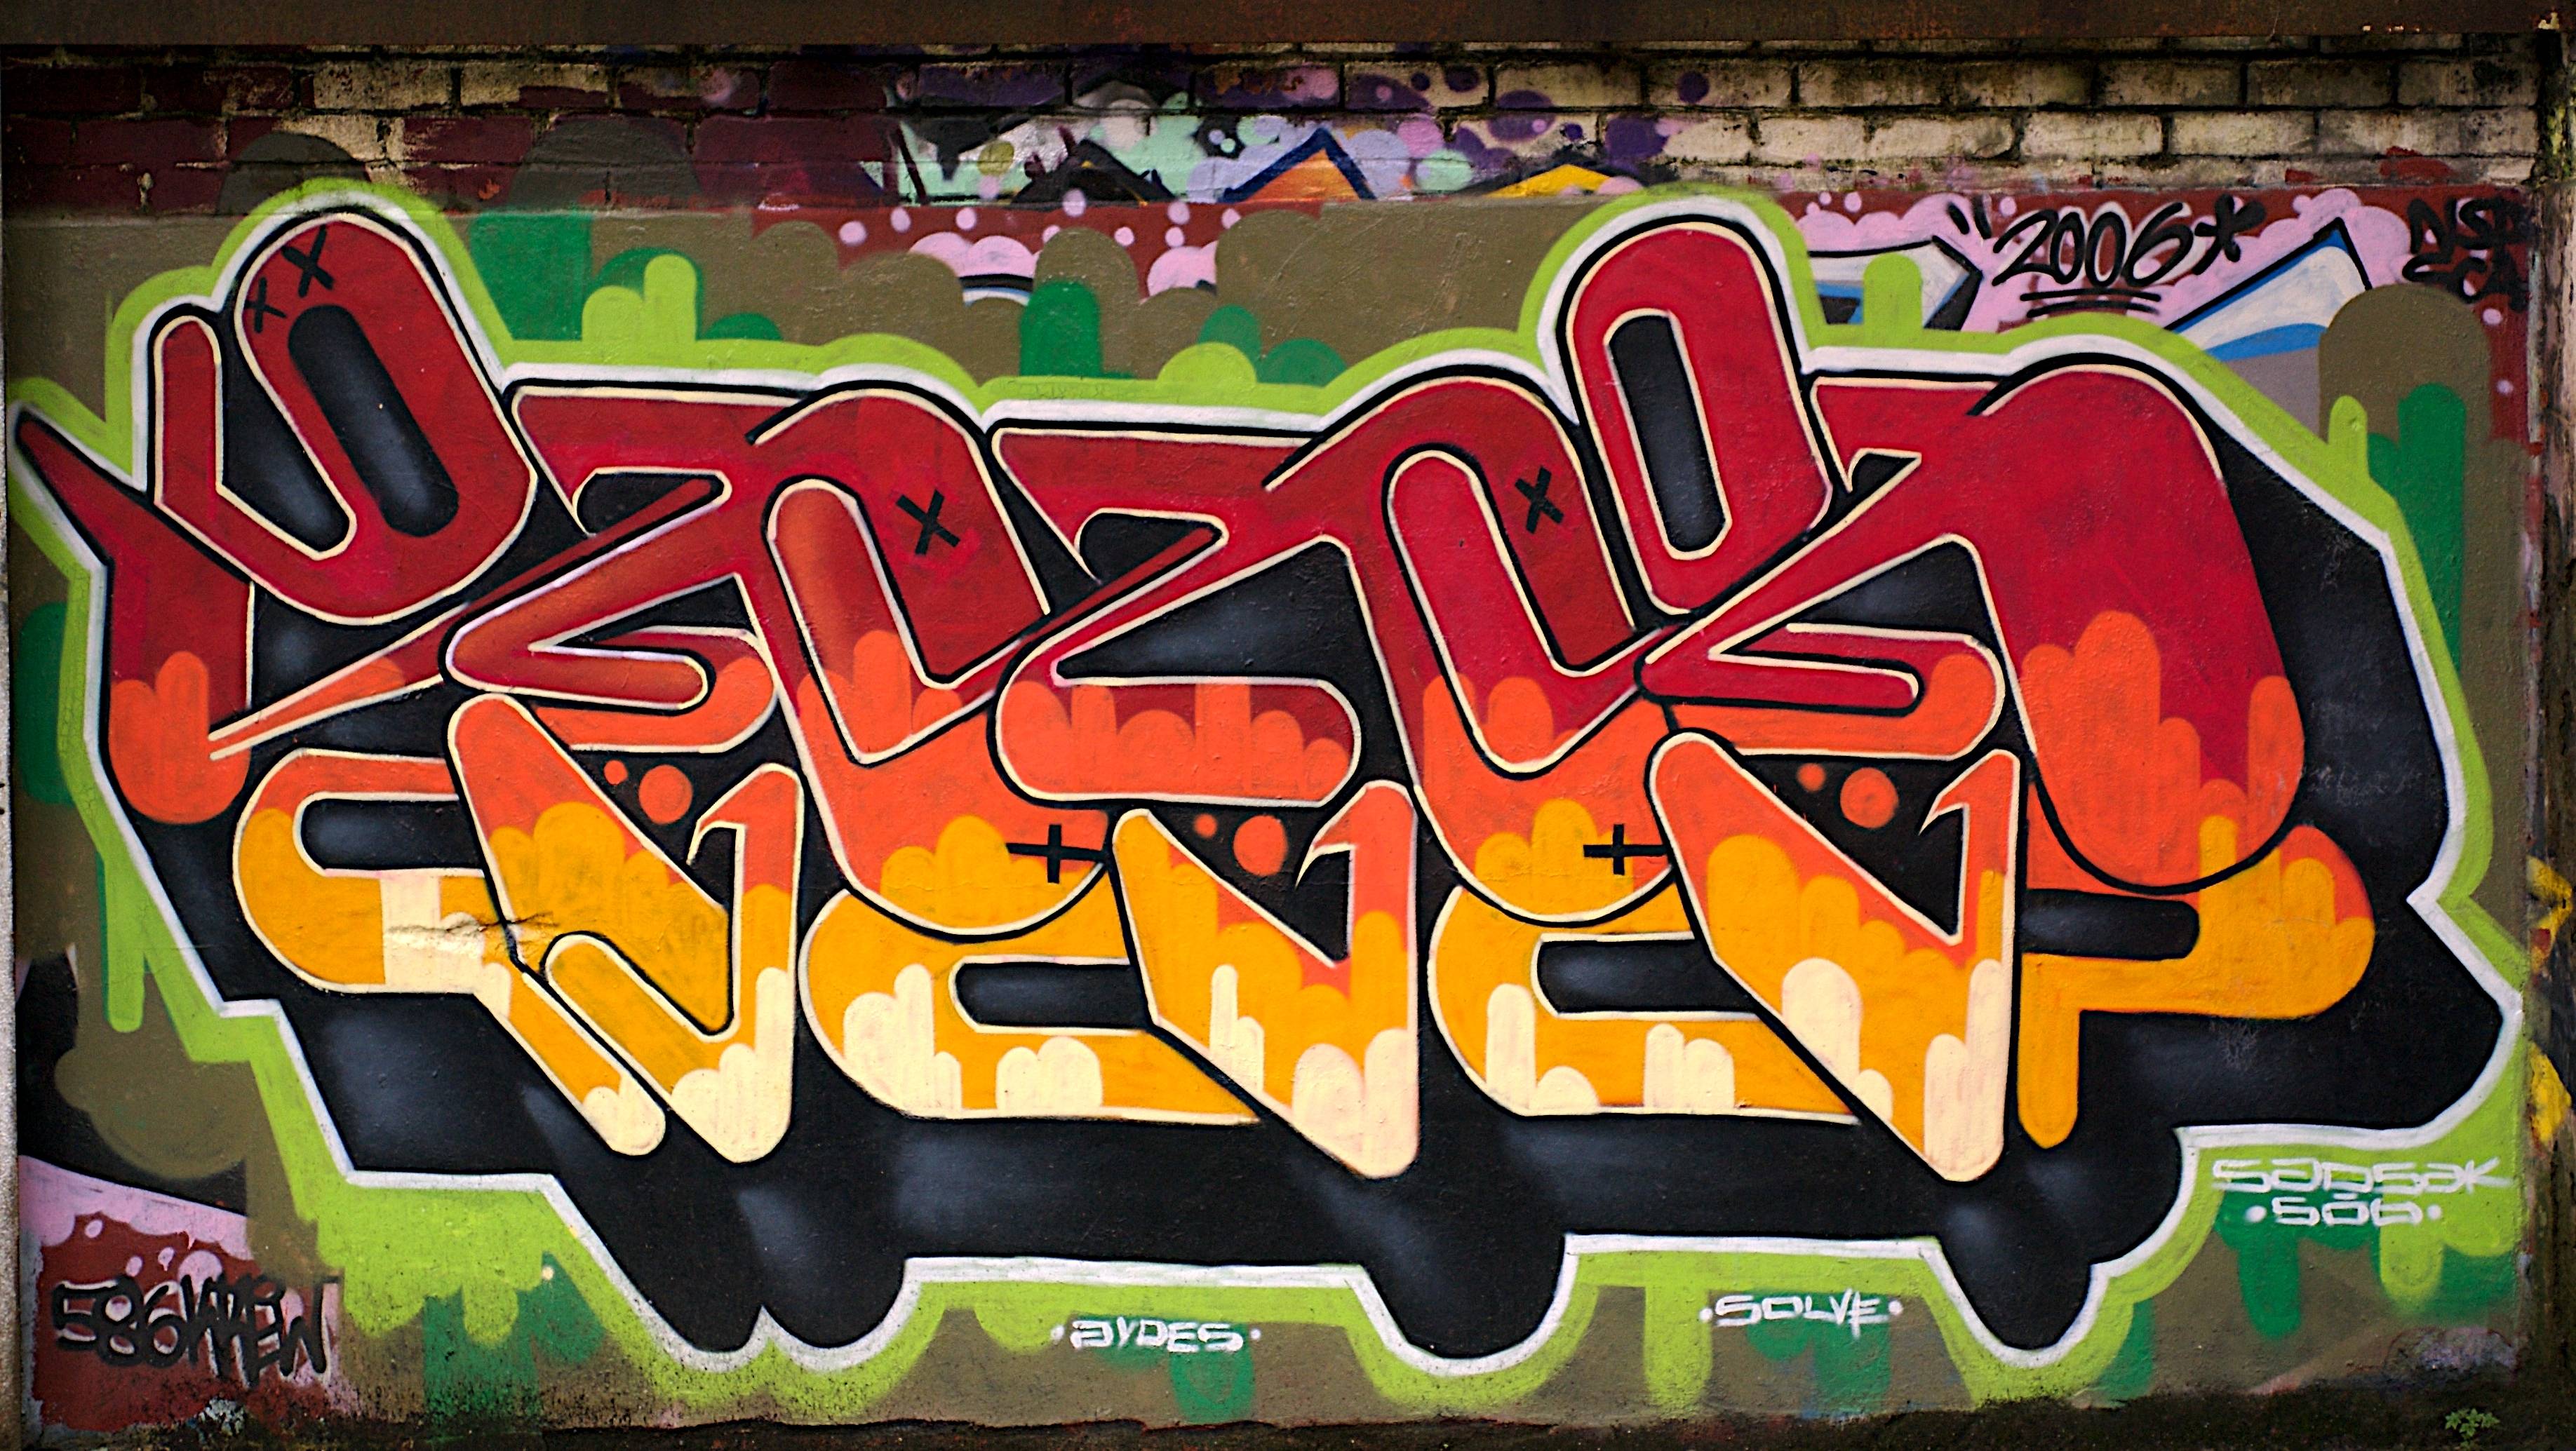 Download Free Graffiti Wallpaper Image For Laptop & Desktops